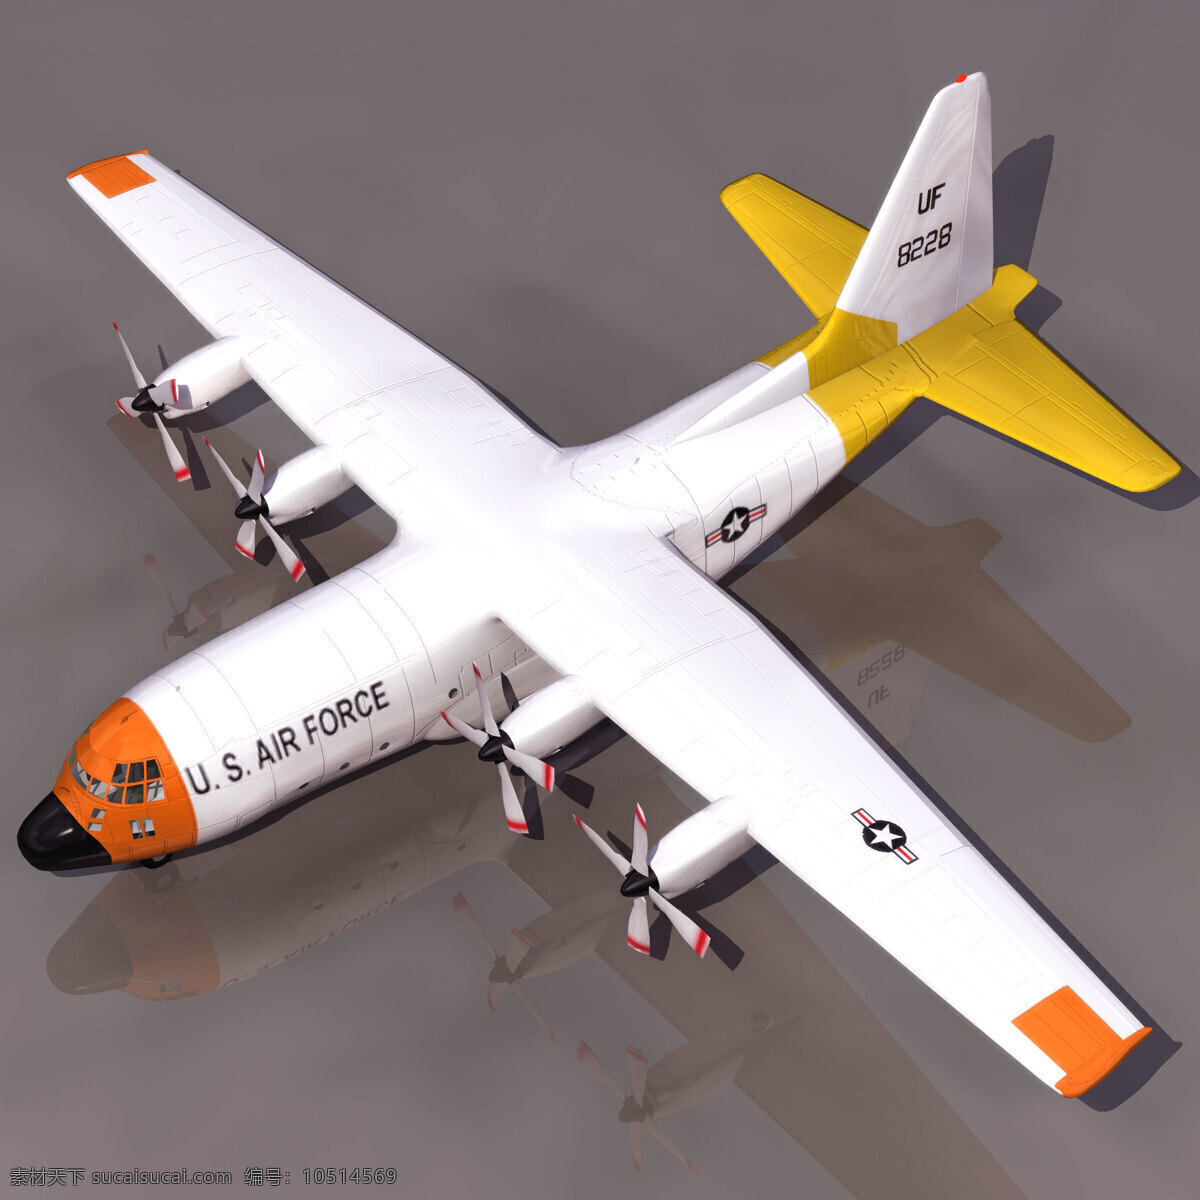 3d 民航 小型 飞机模型 3d飞机模型 3d设计模型 max 民航飞机 私人飞机 模板下载 机场设备模型 3d模型素材 其他3d模型